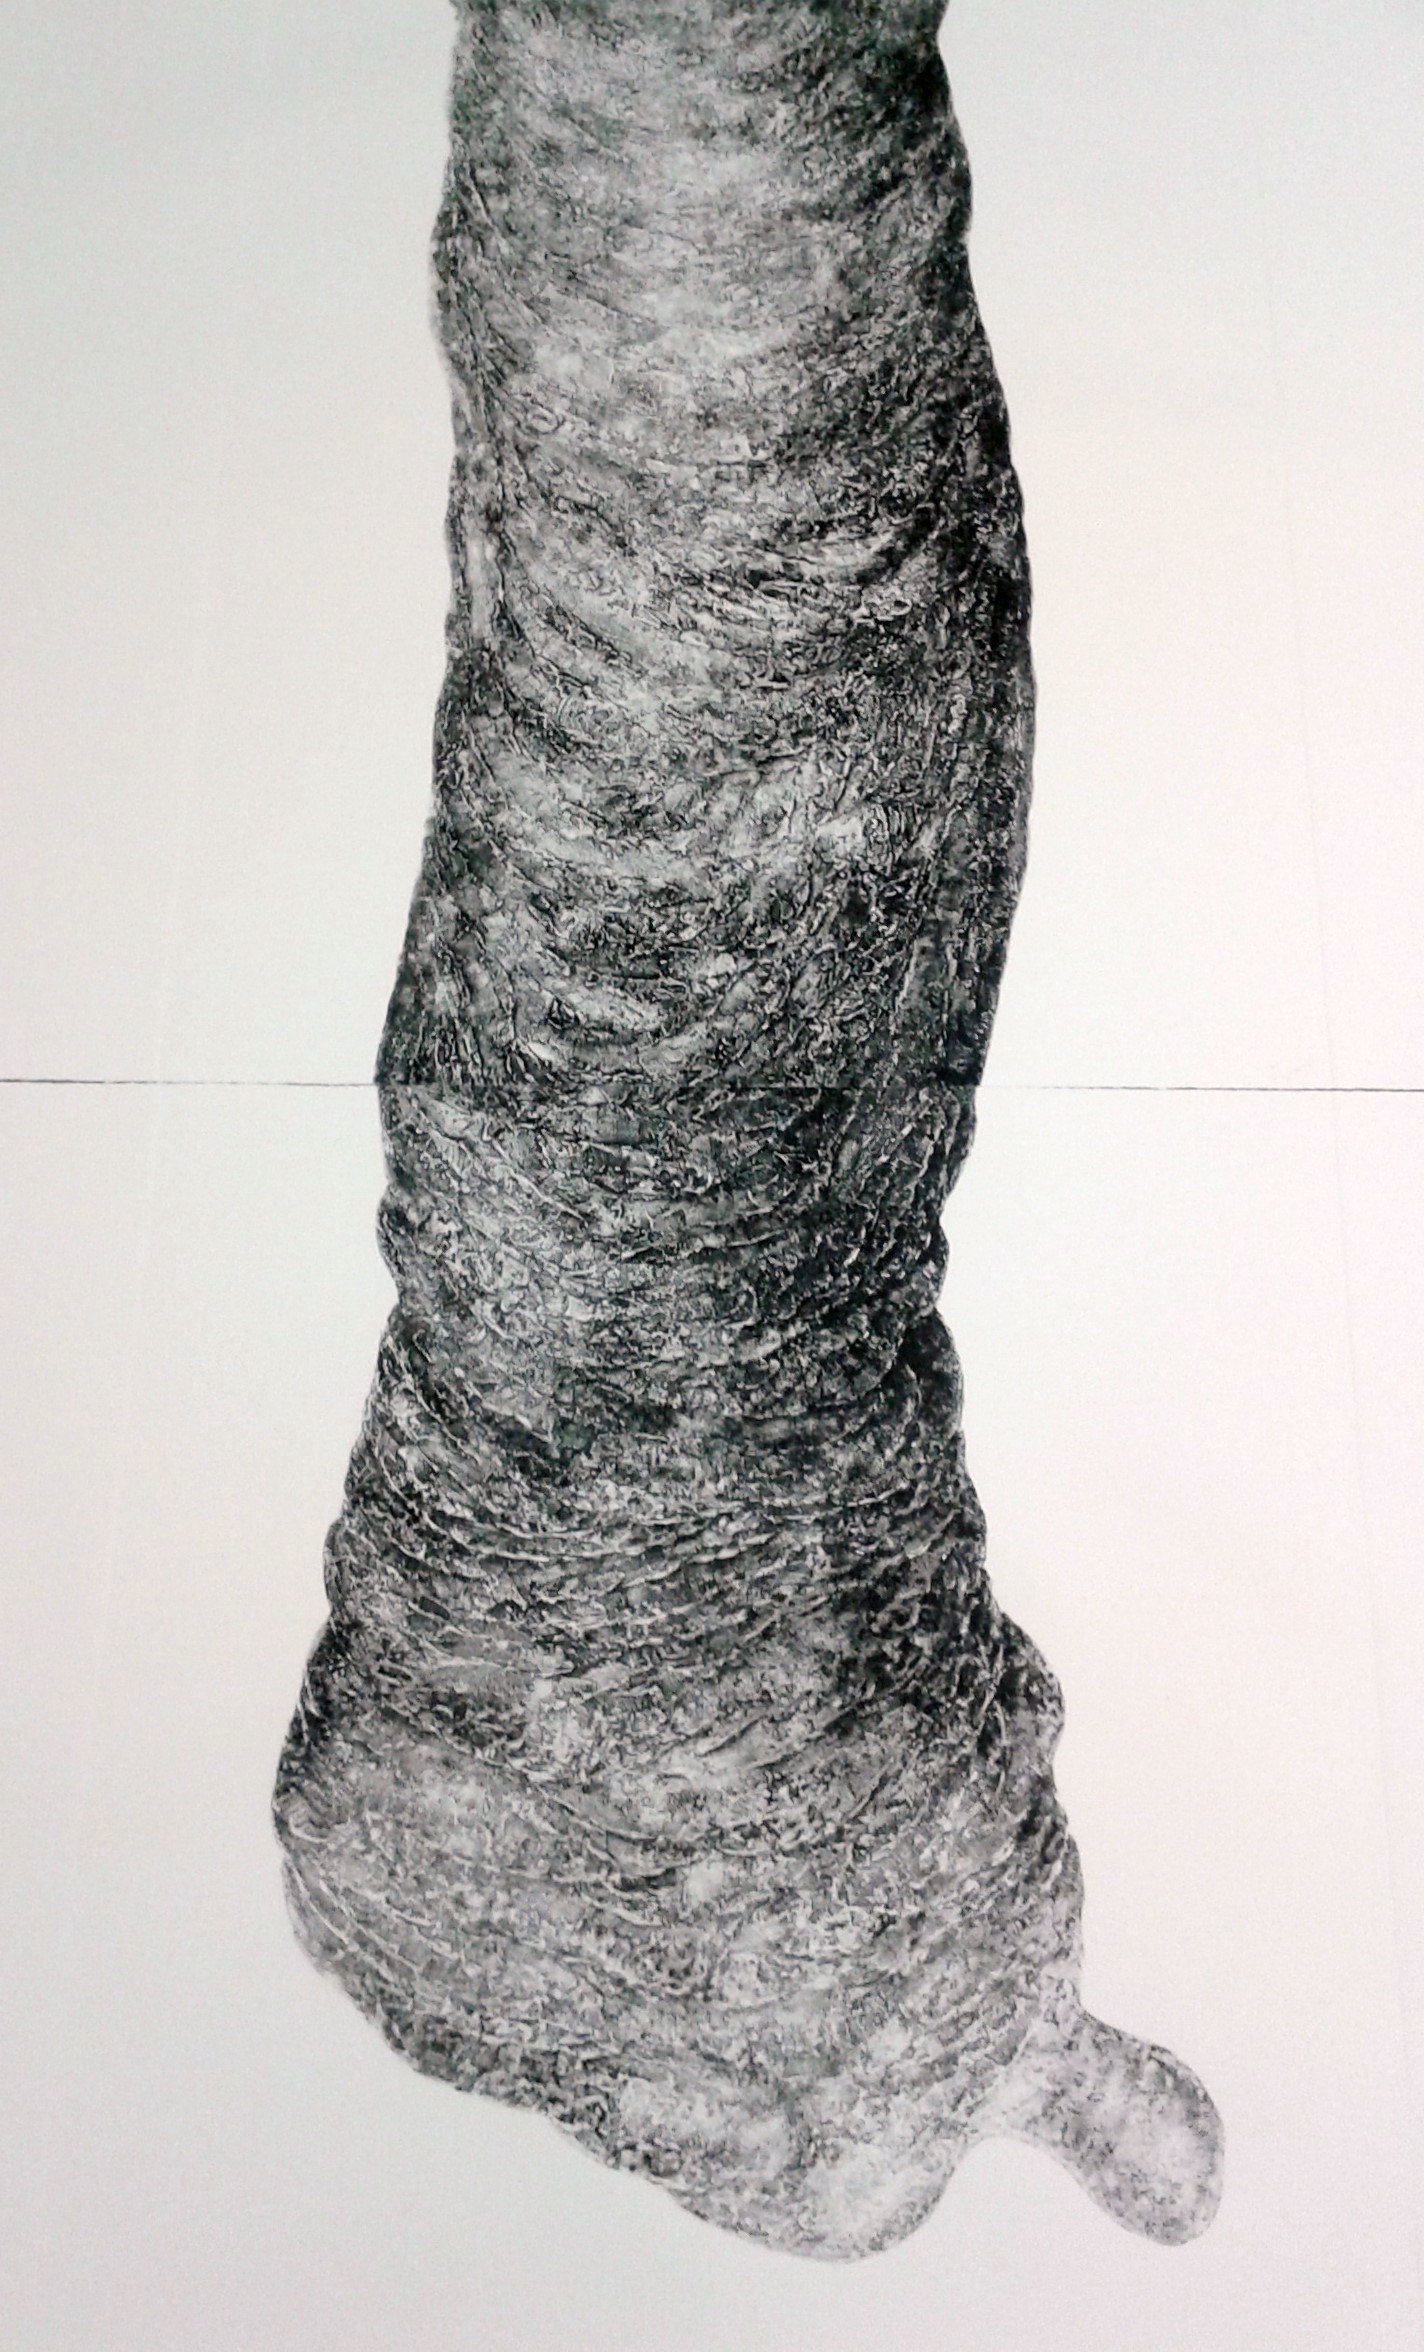    Mater,  (Detail) 60x118cm, collagraph print, 2017.  